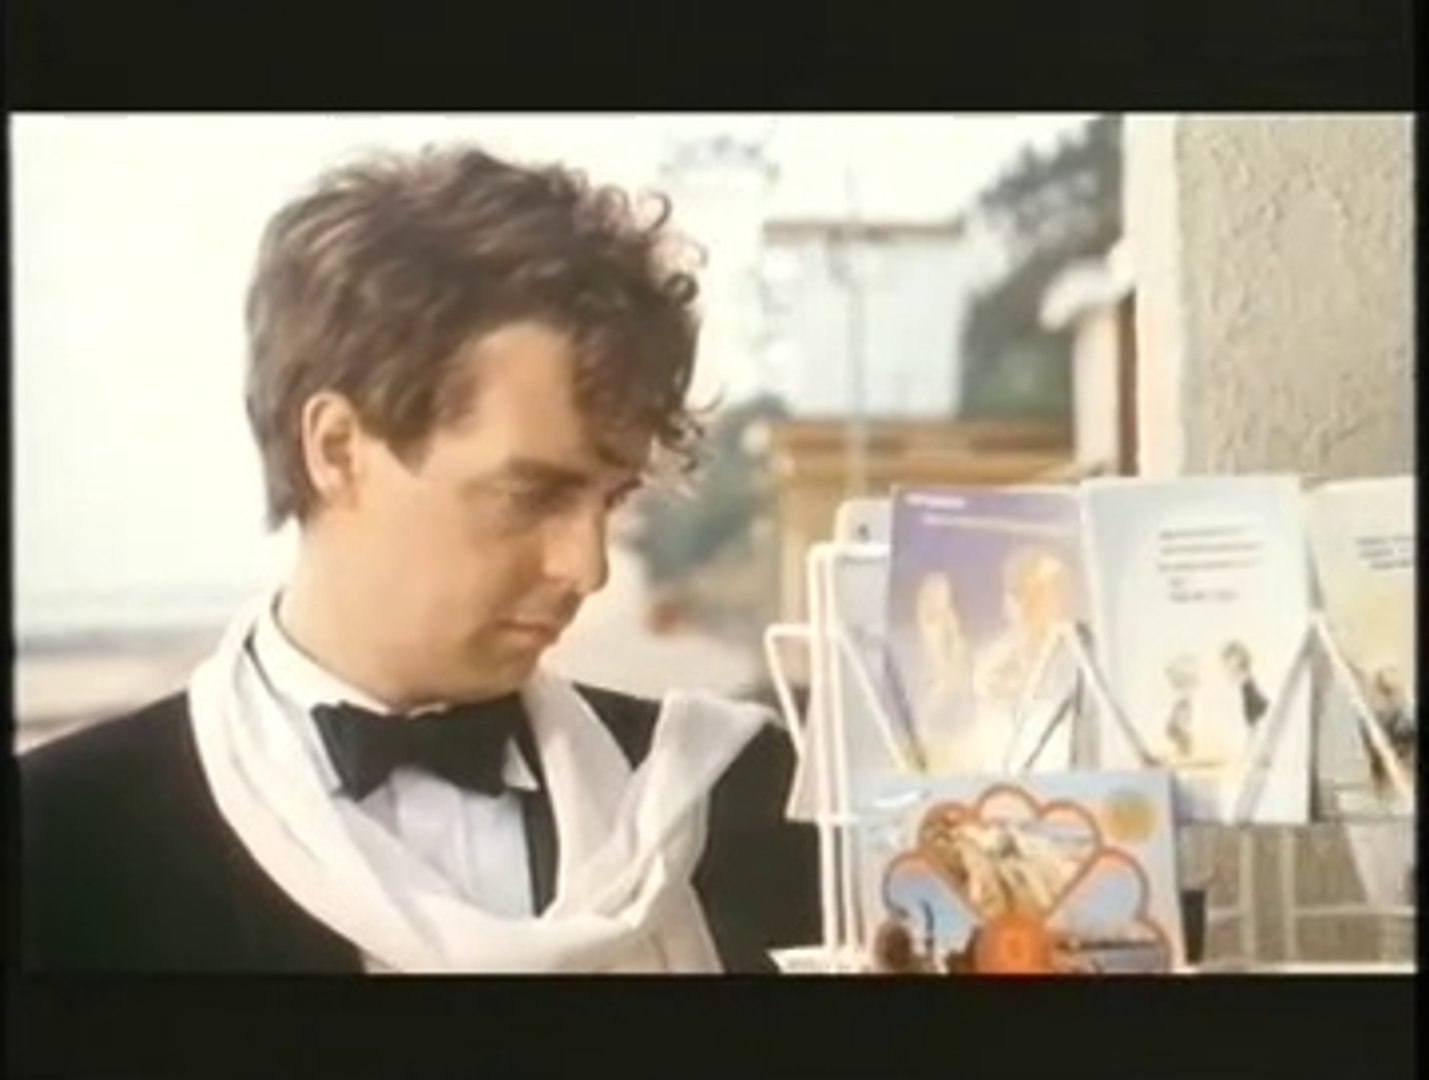 Pet Shop Boys: Heart (1988) - Filmaffinity